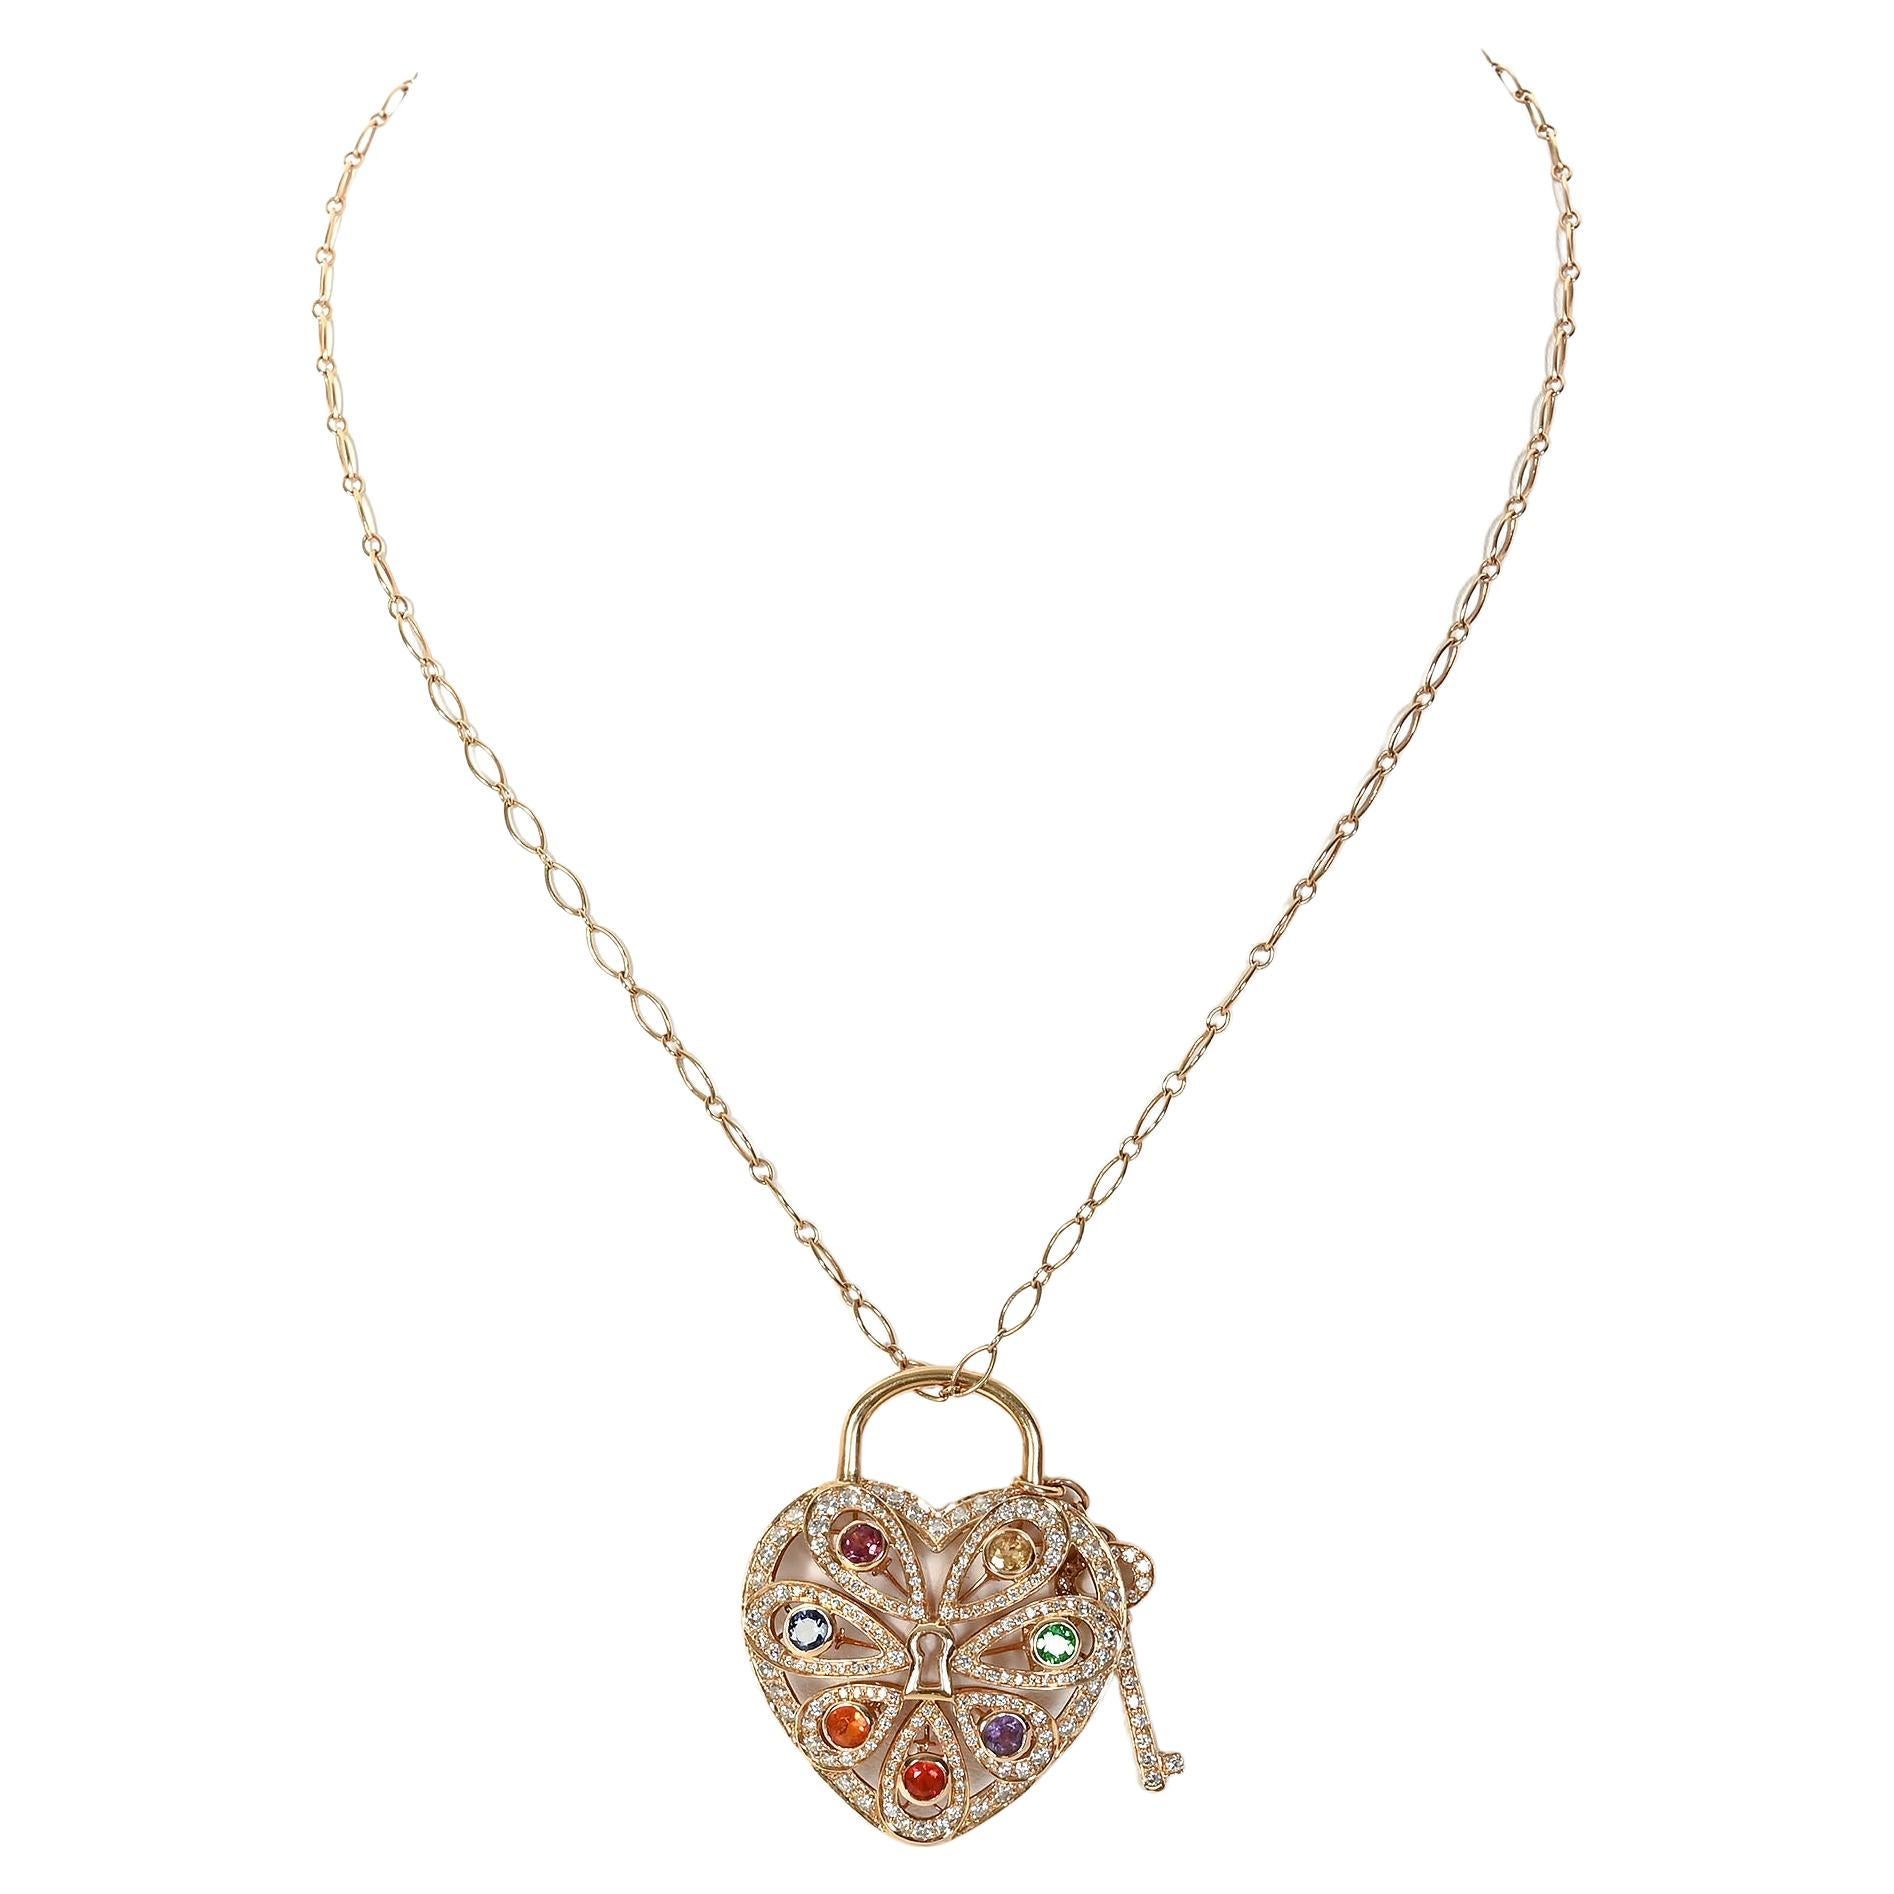 Tiffany & Co. Jeweled Heart and Key Necklace